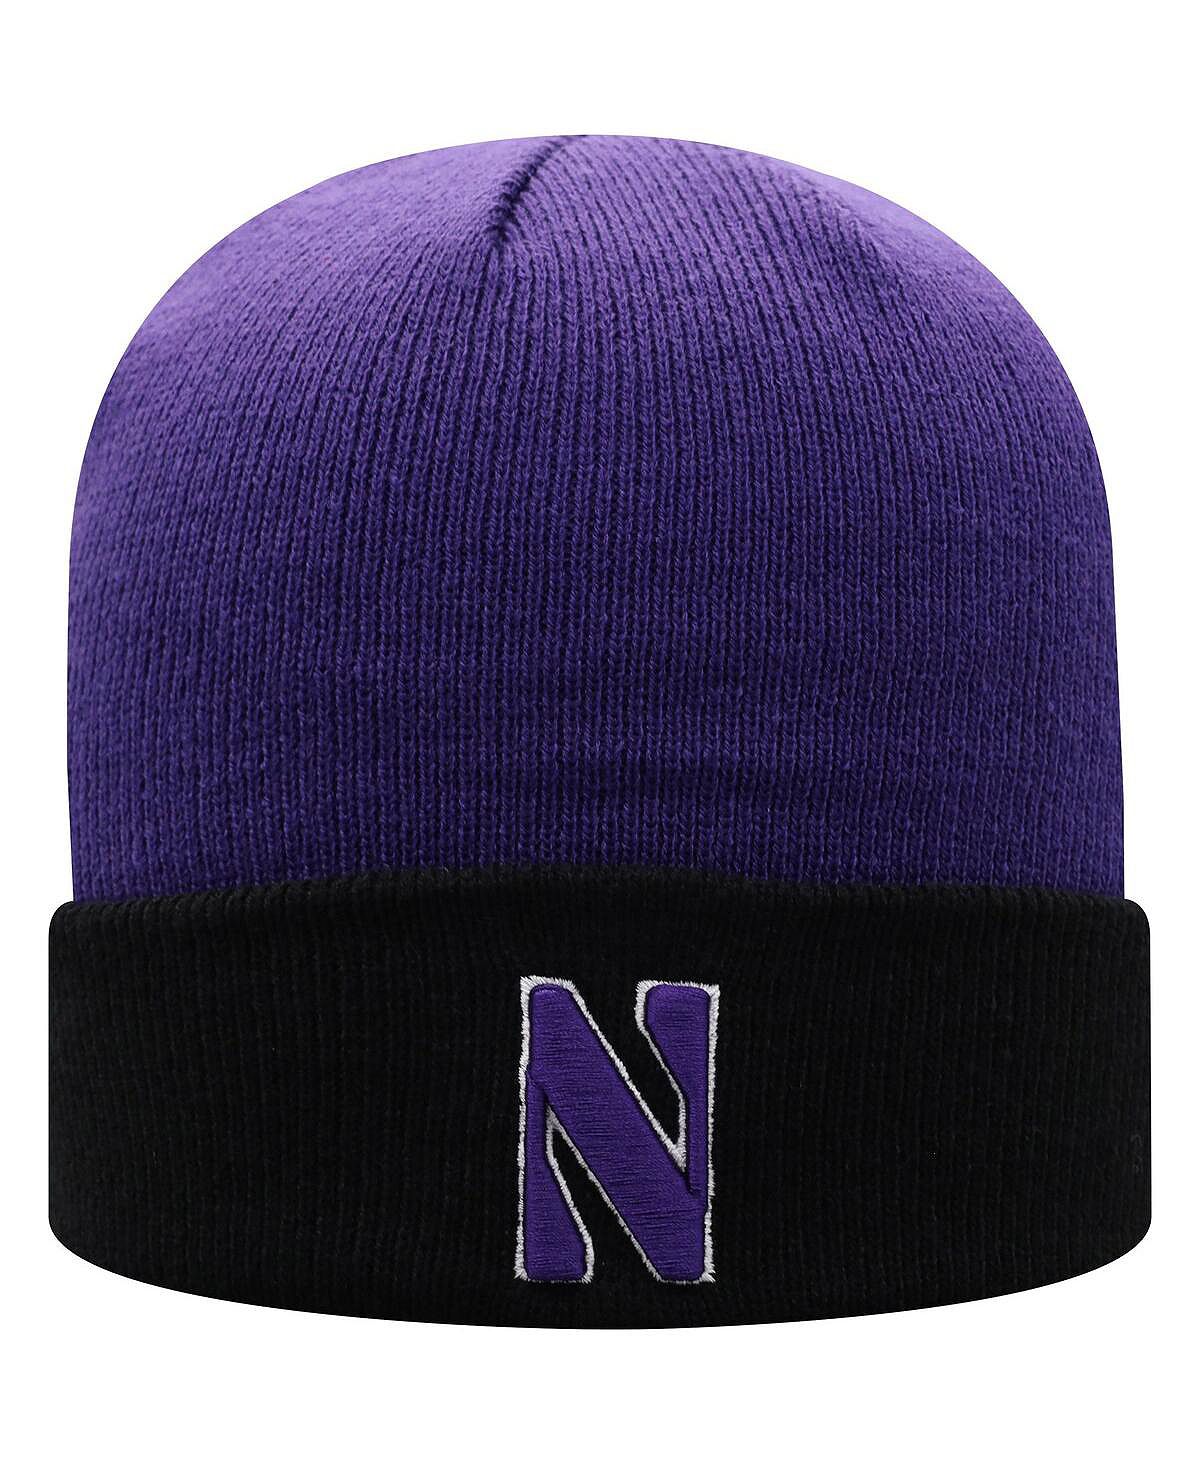 Мужская фиолетово-черная двухцветная вязаная шапка Northwestern Wildcats Core с манжетами Top of the World